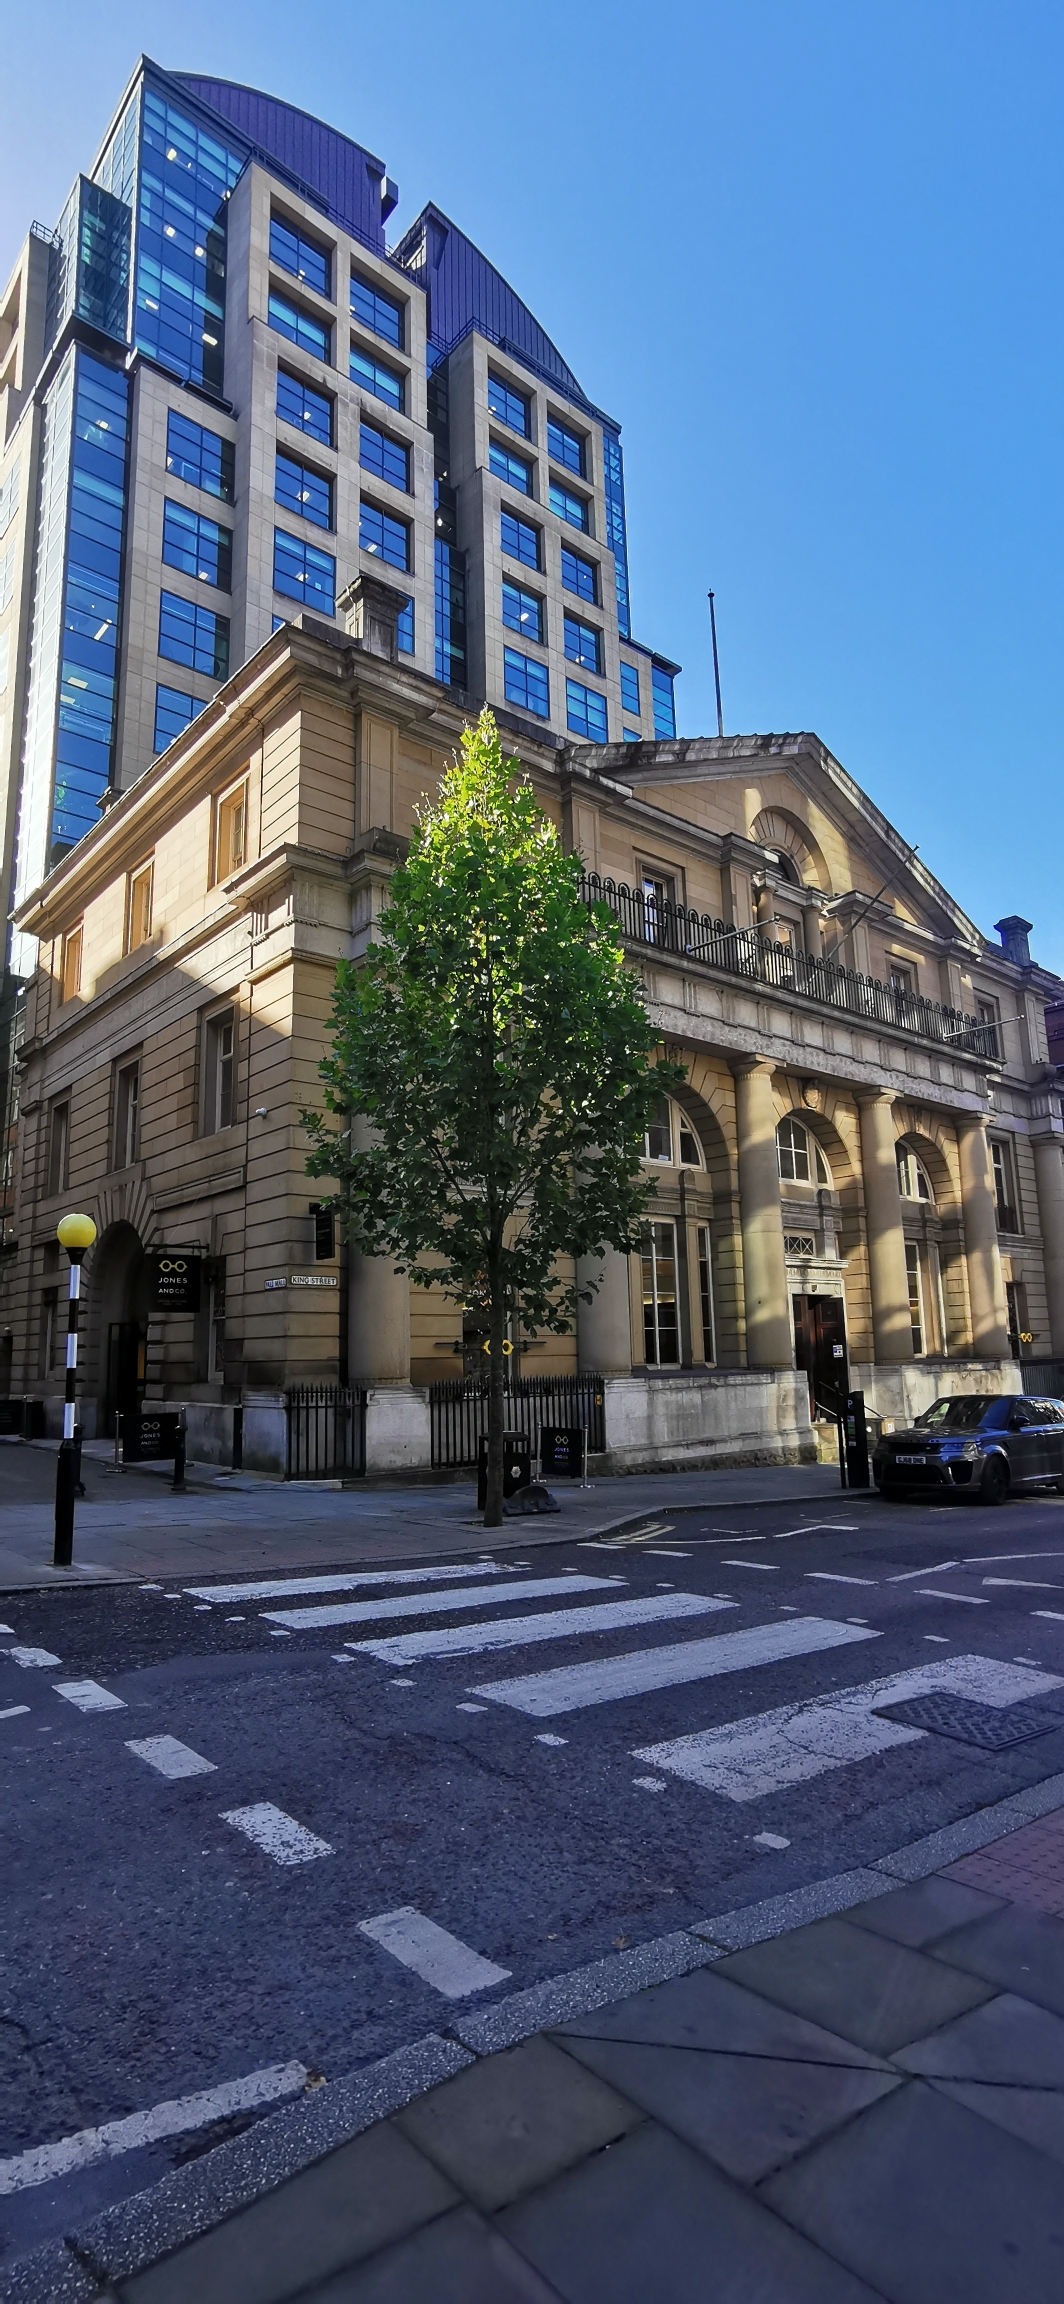 Photo taken between Cross Street and Bank of England